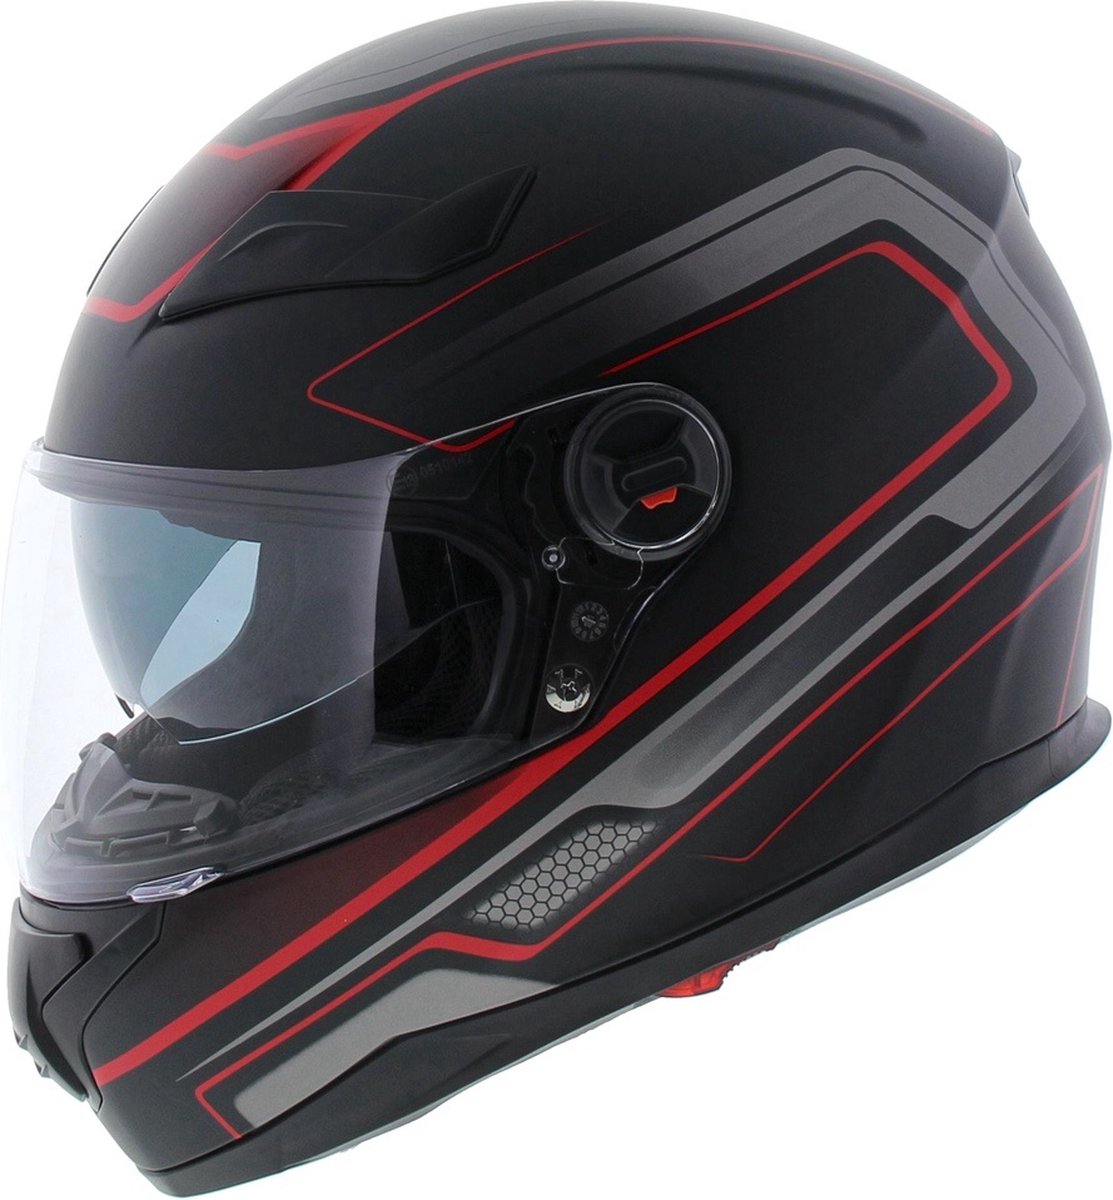 Motor / Scooter Helm - Vito Falcone - Integraalhelm - Mat zwart / rood - M